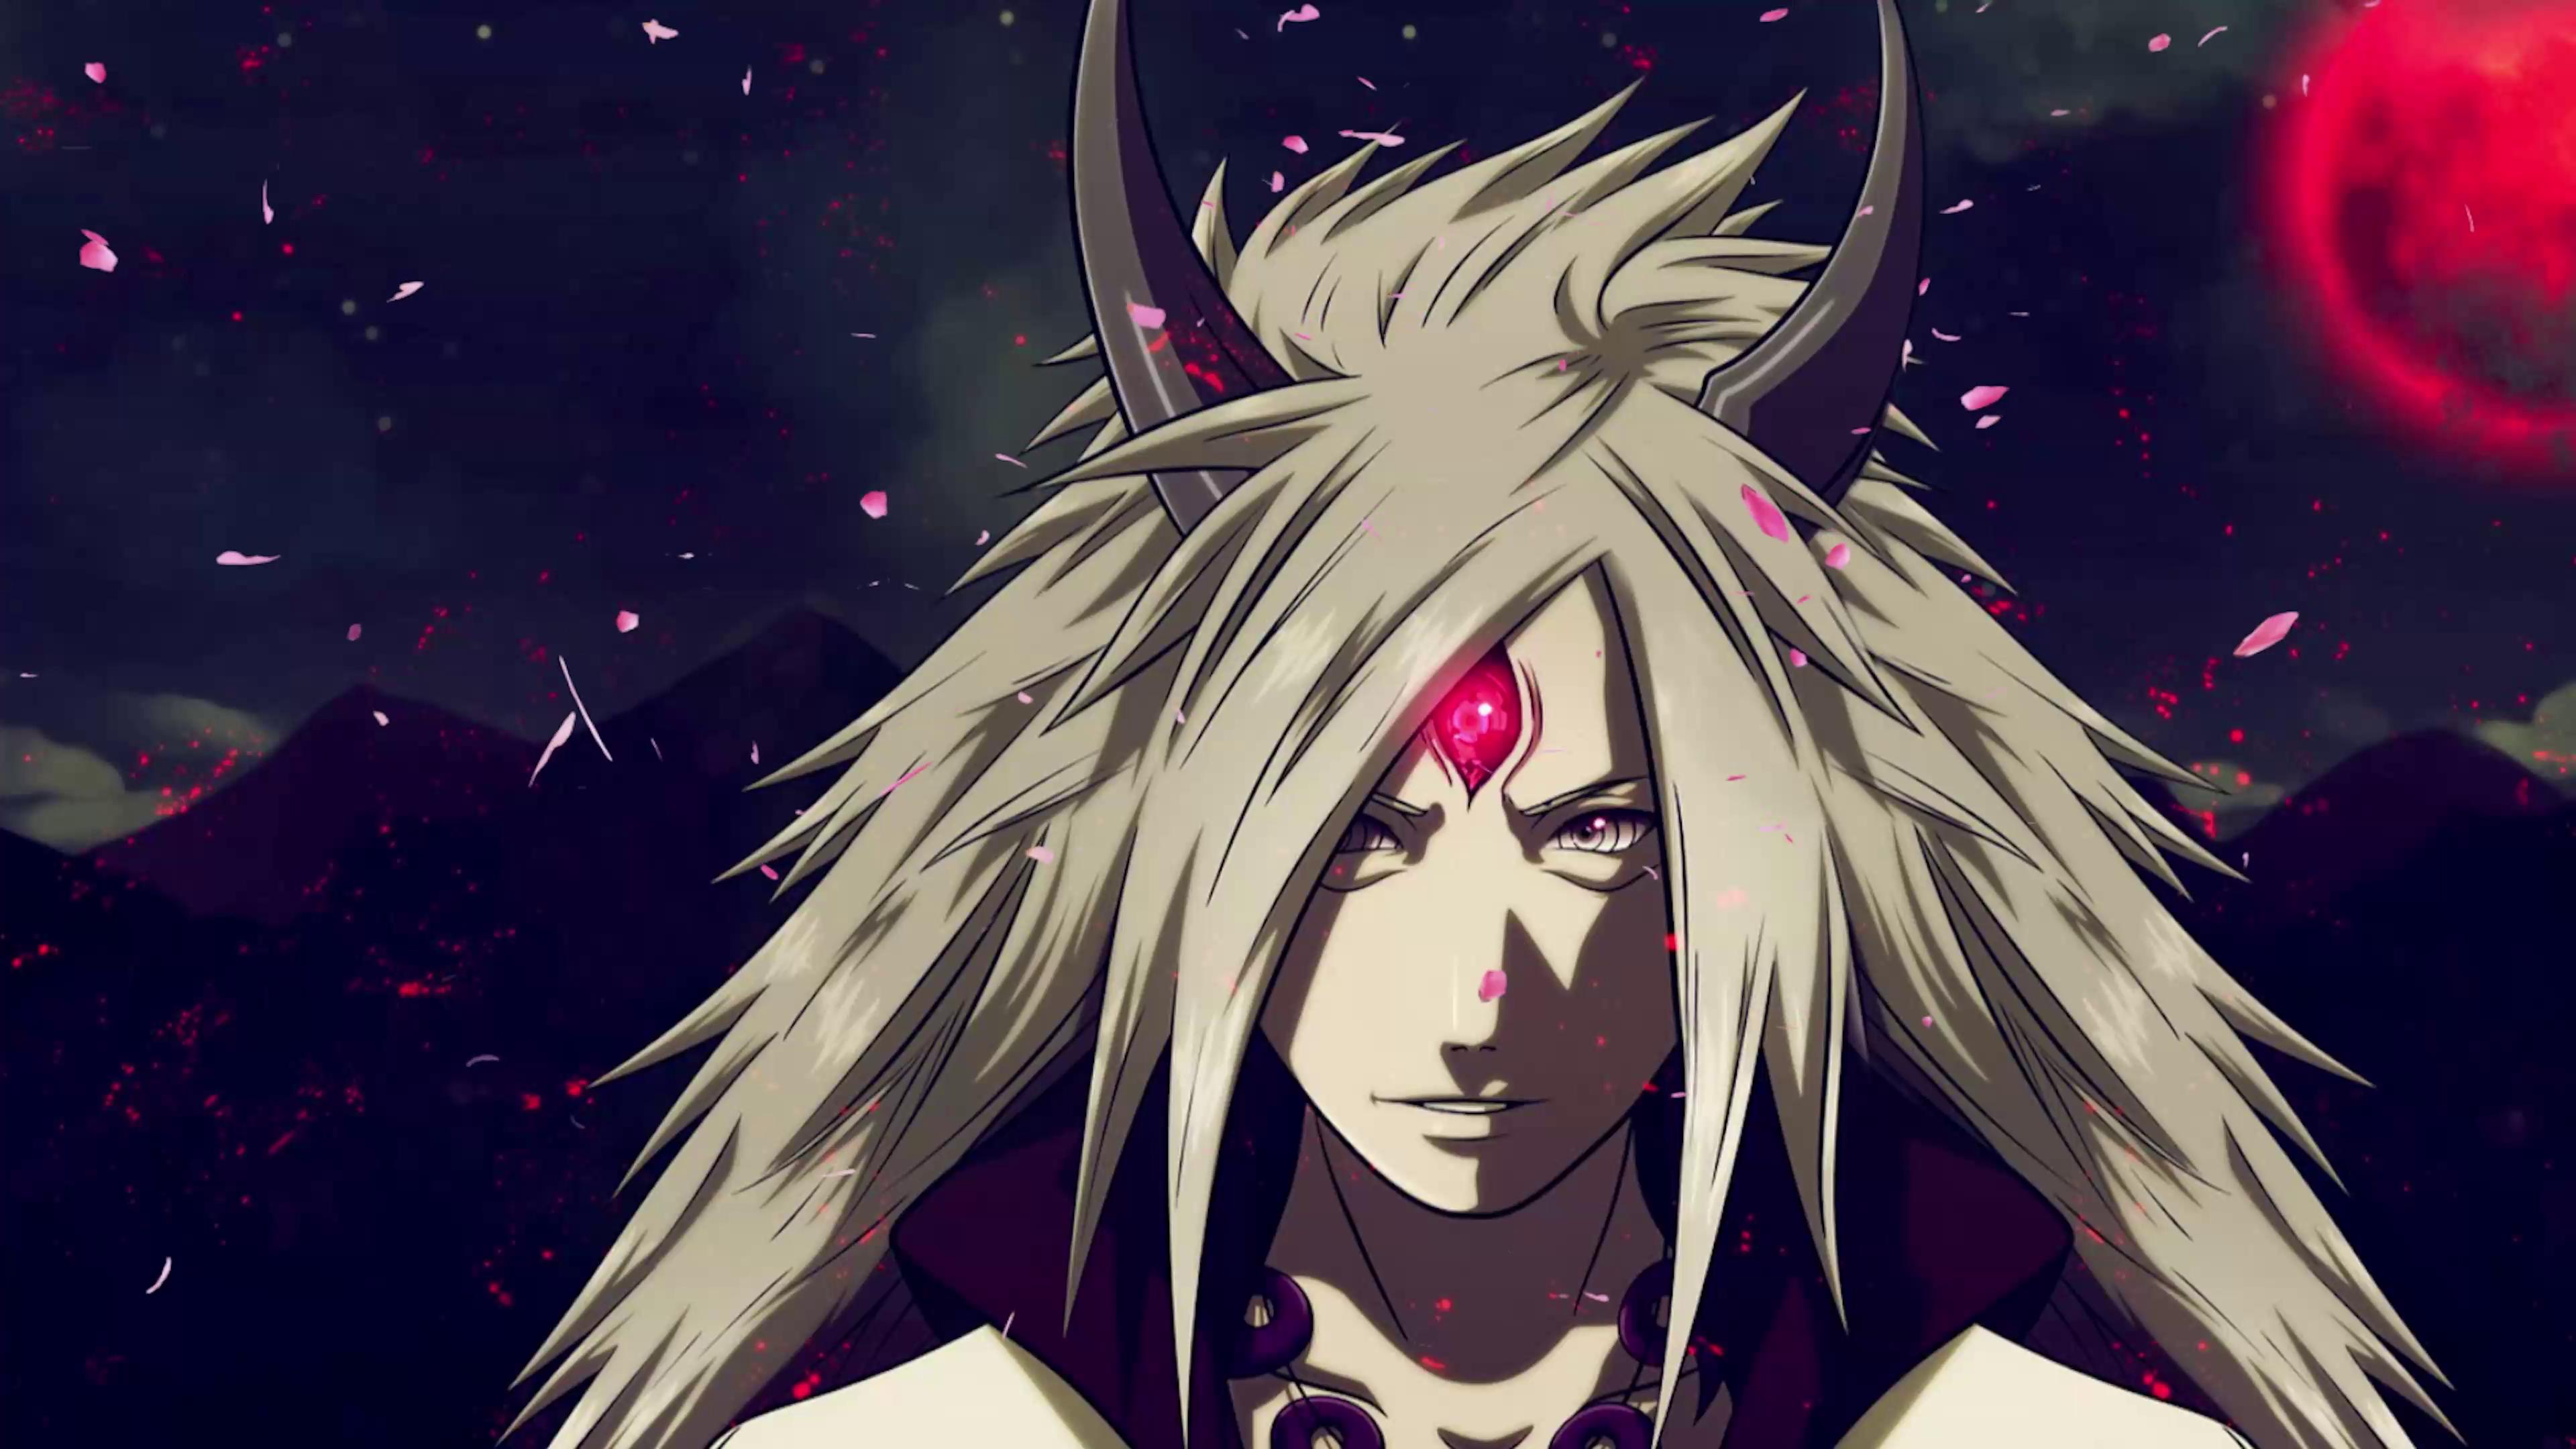 Raia third eye | Anime, Anime character design, Third eye